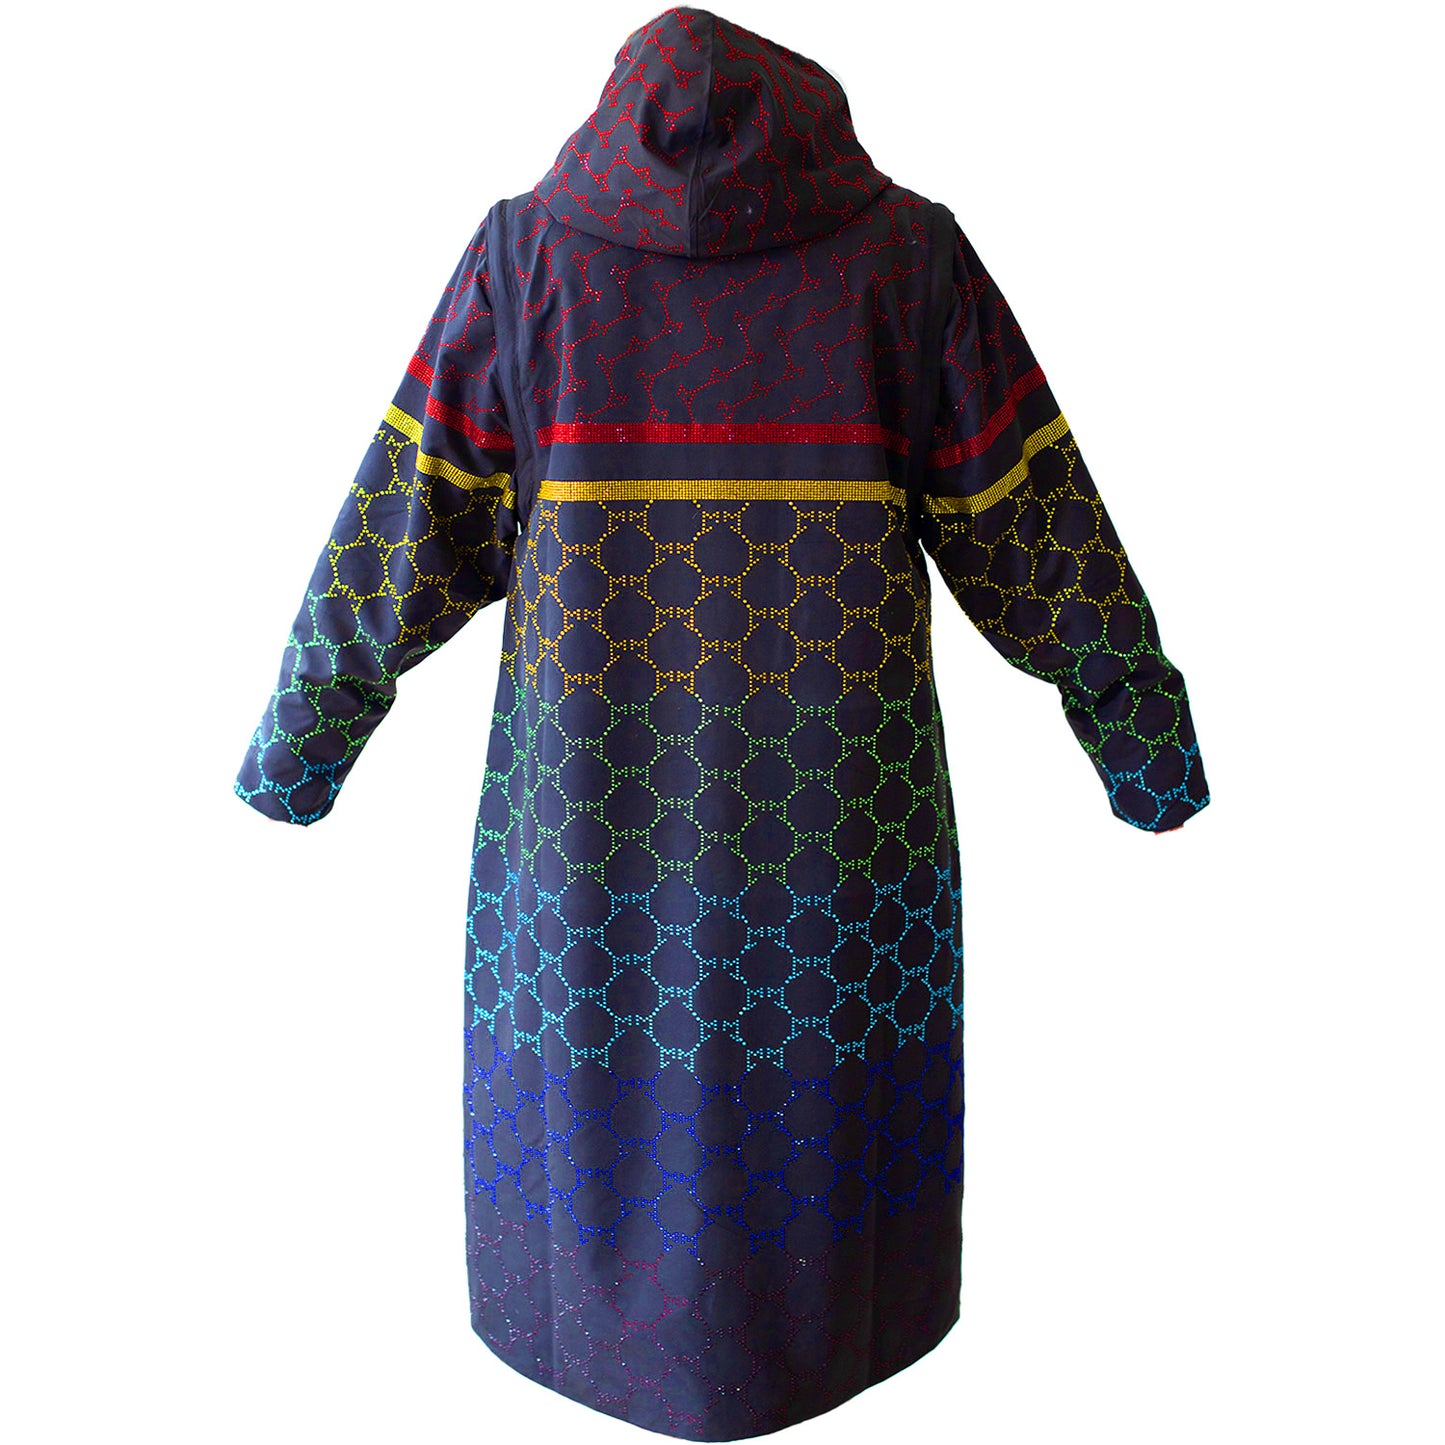 SALE swarovski rainbow raincoat/vest